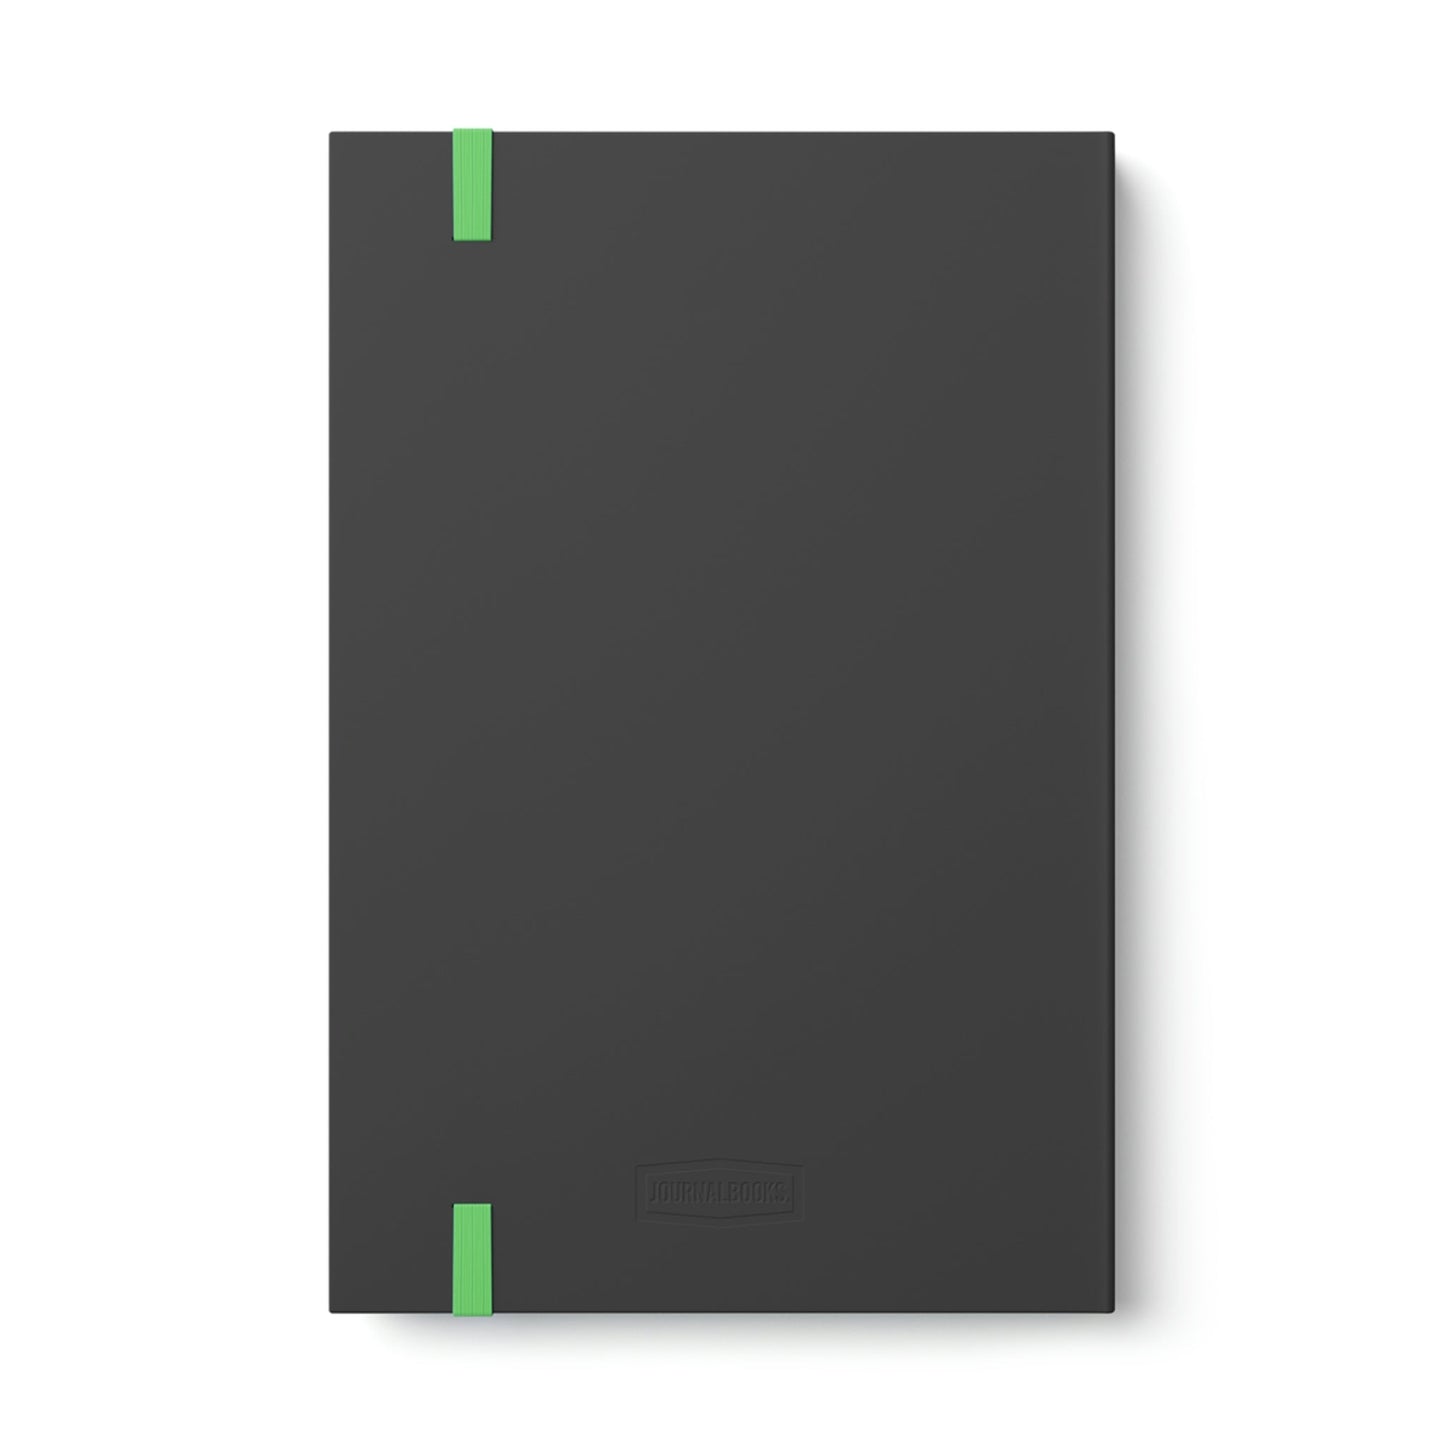 Elephant "Memories & Musings" Color Contrast Notebook Journal - Ruled